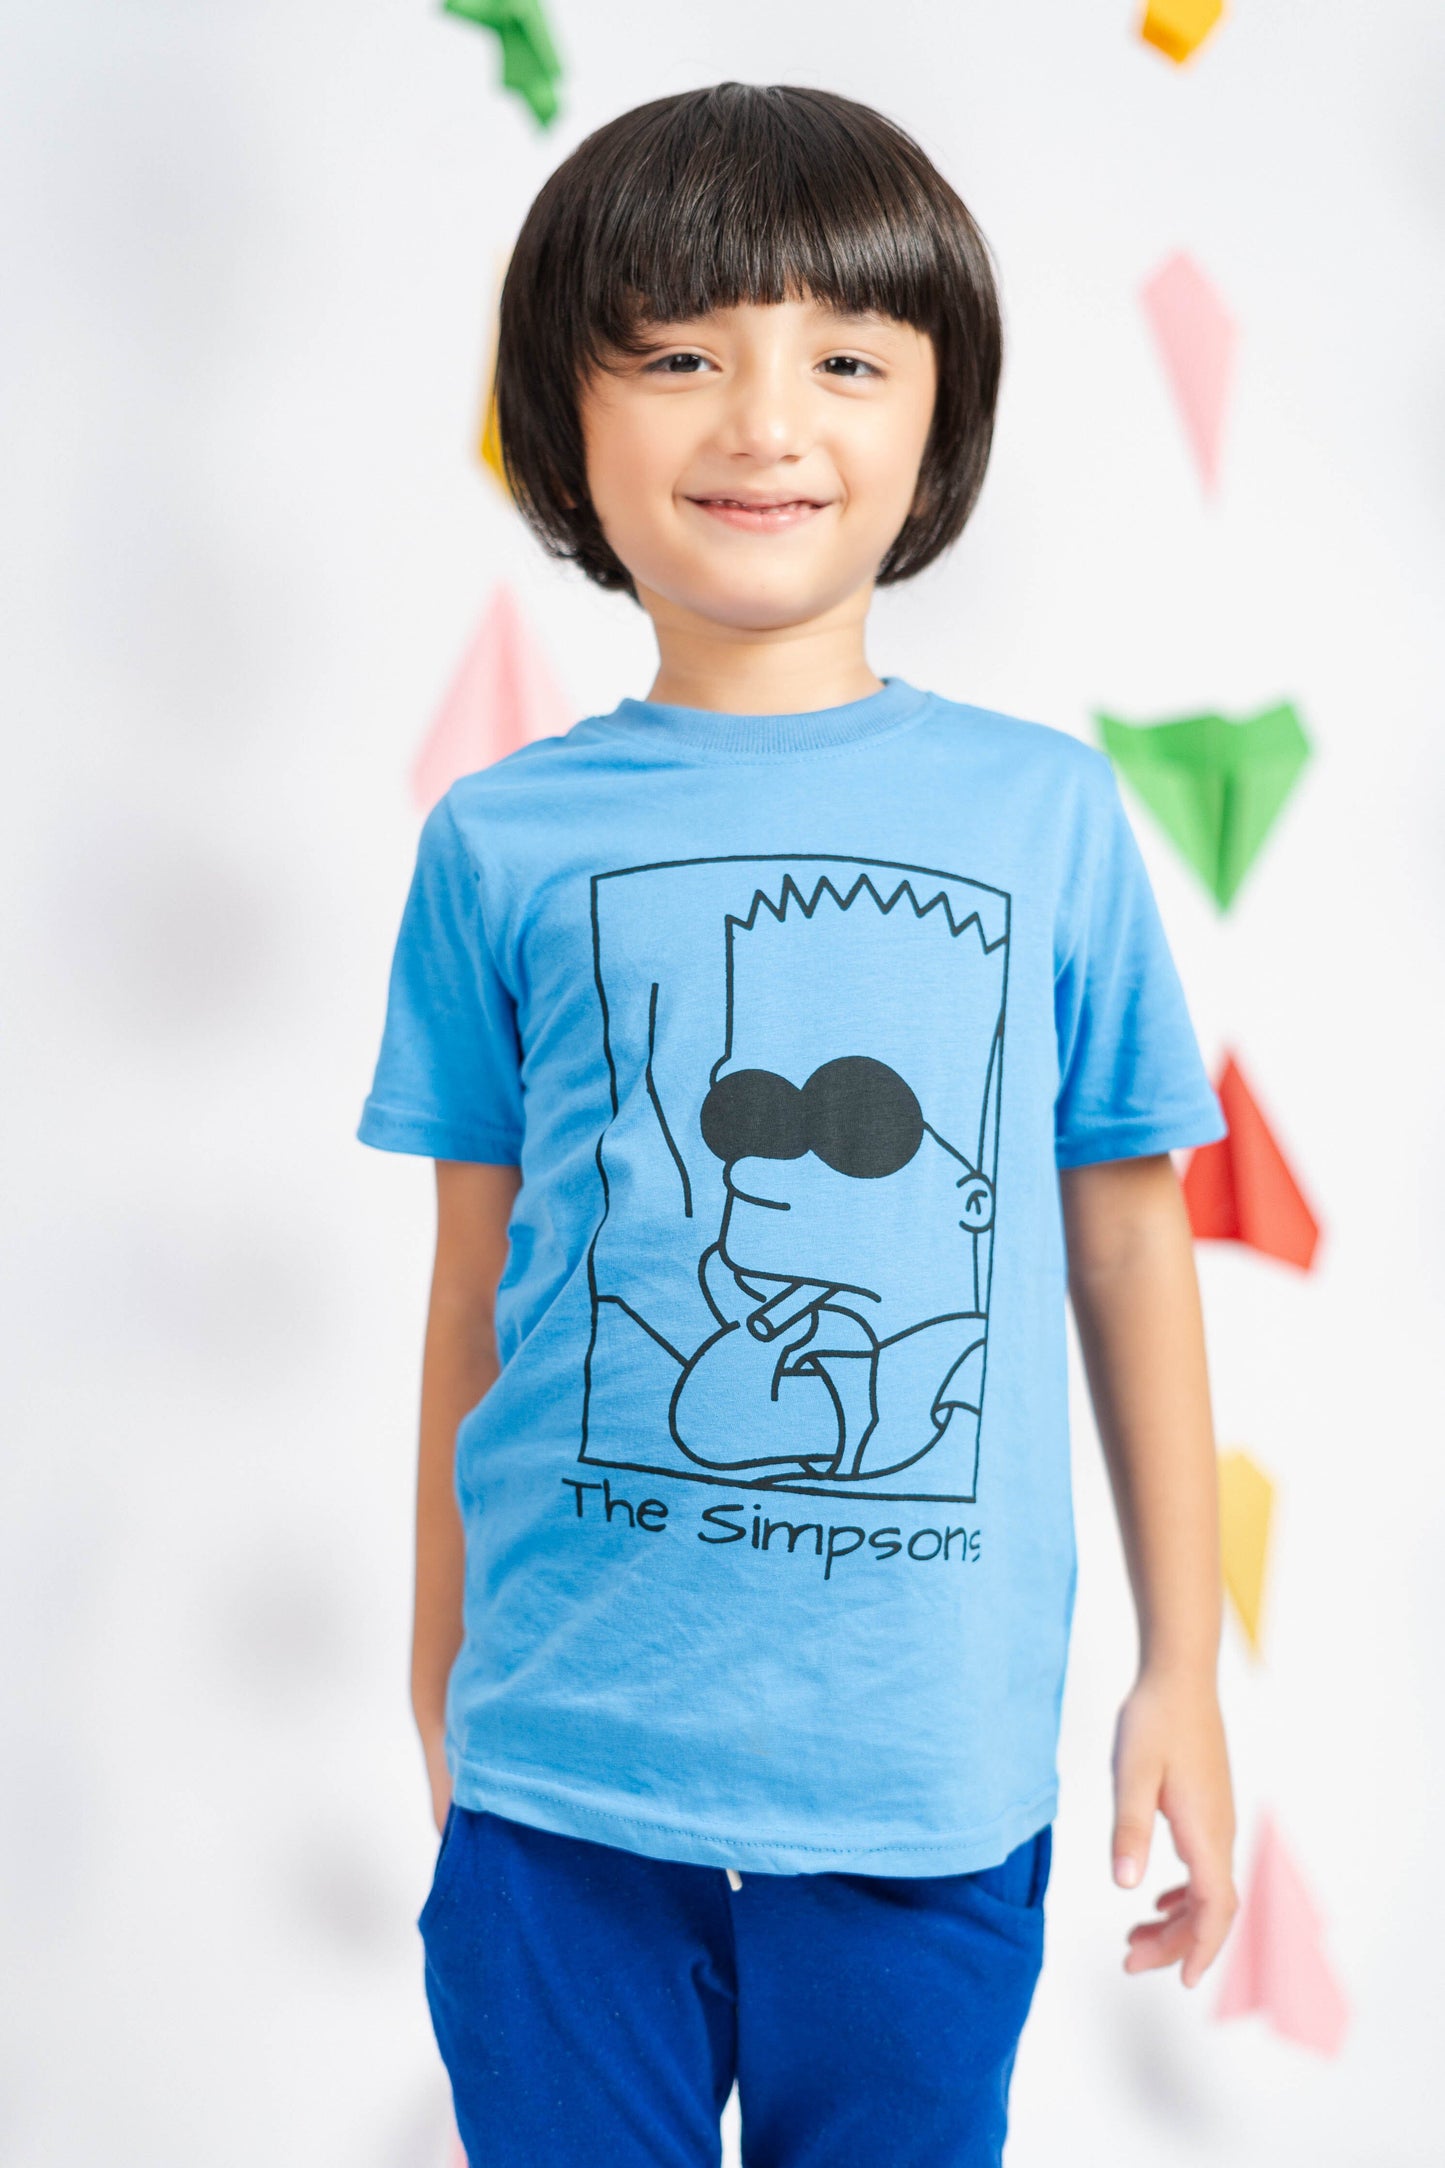 Junior Republic Kid's The Simpsons Printed Tee Shirt Boy's Tee Shirt JRR 